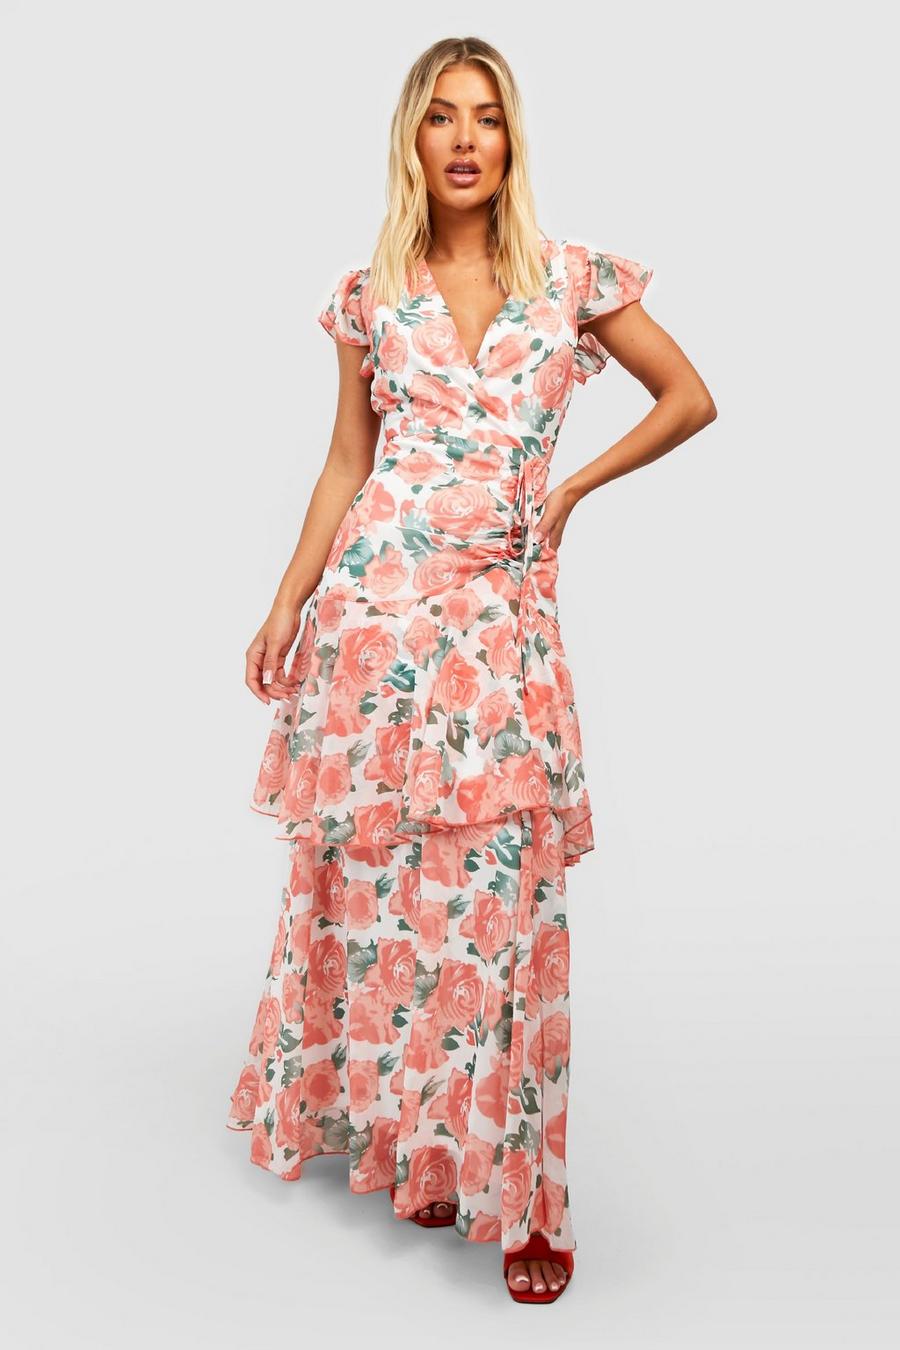 Coral pink Floral Chiffon Ruffle Tiered Maxi Dress